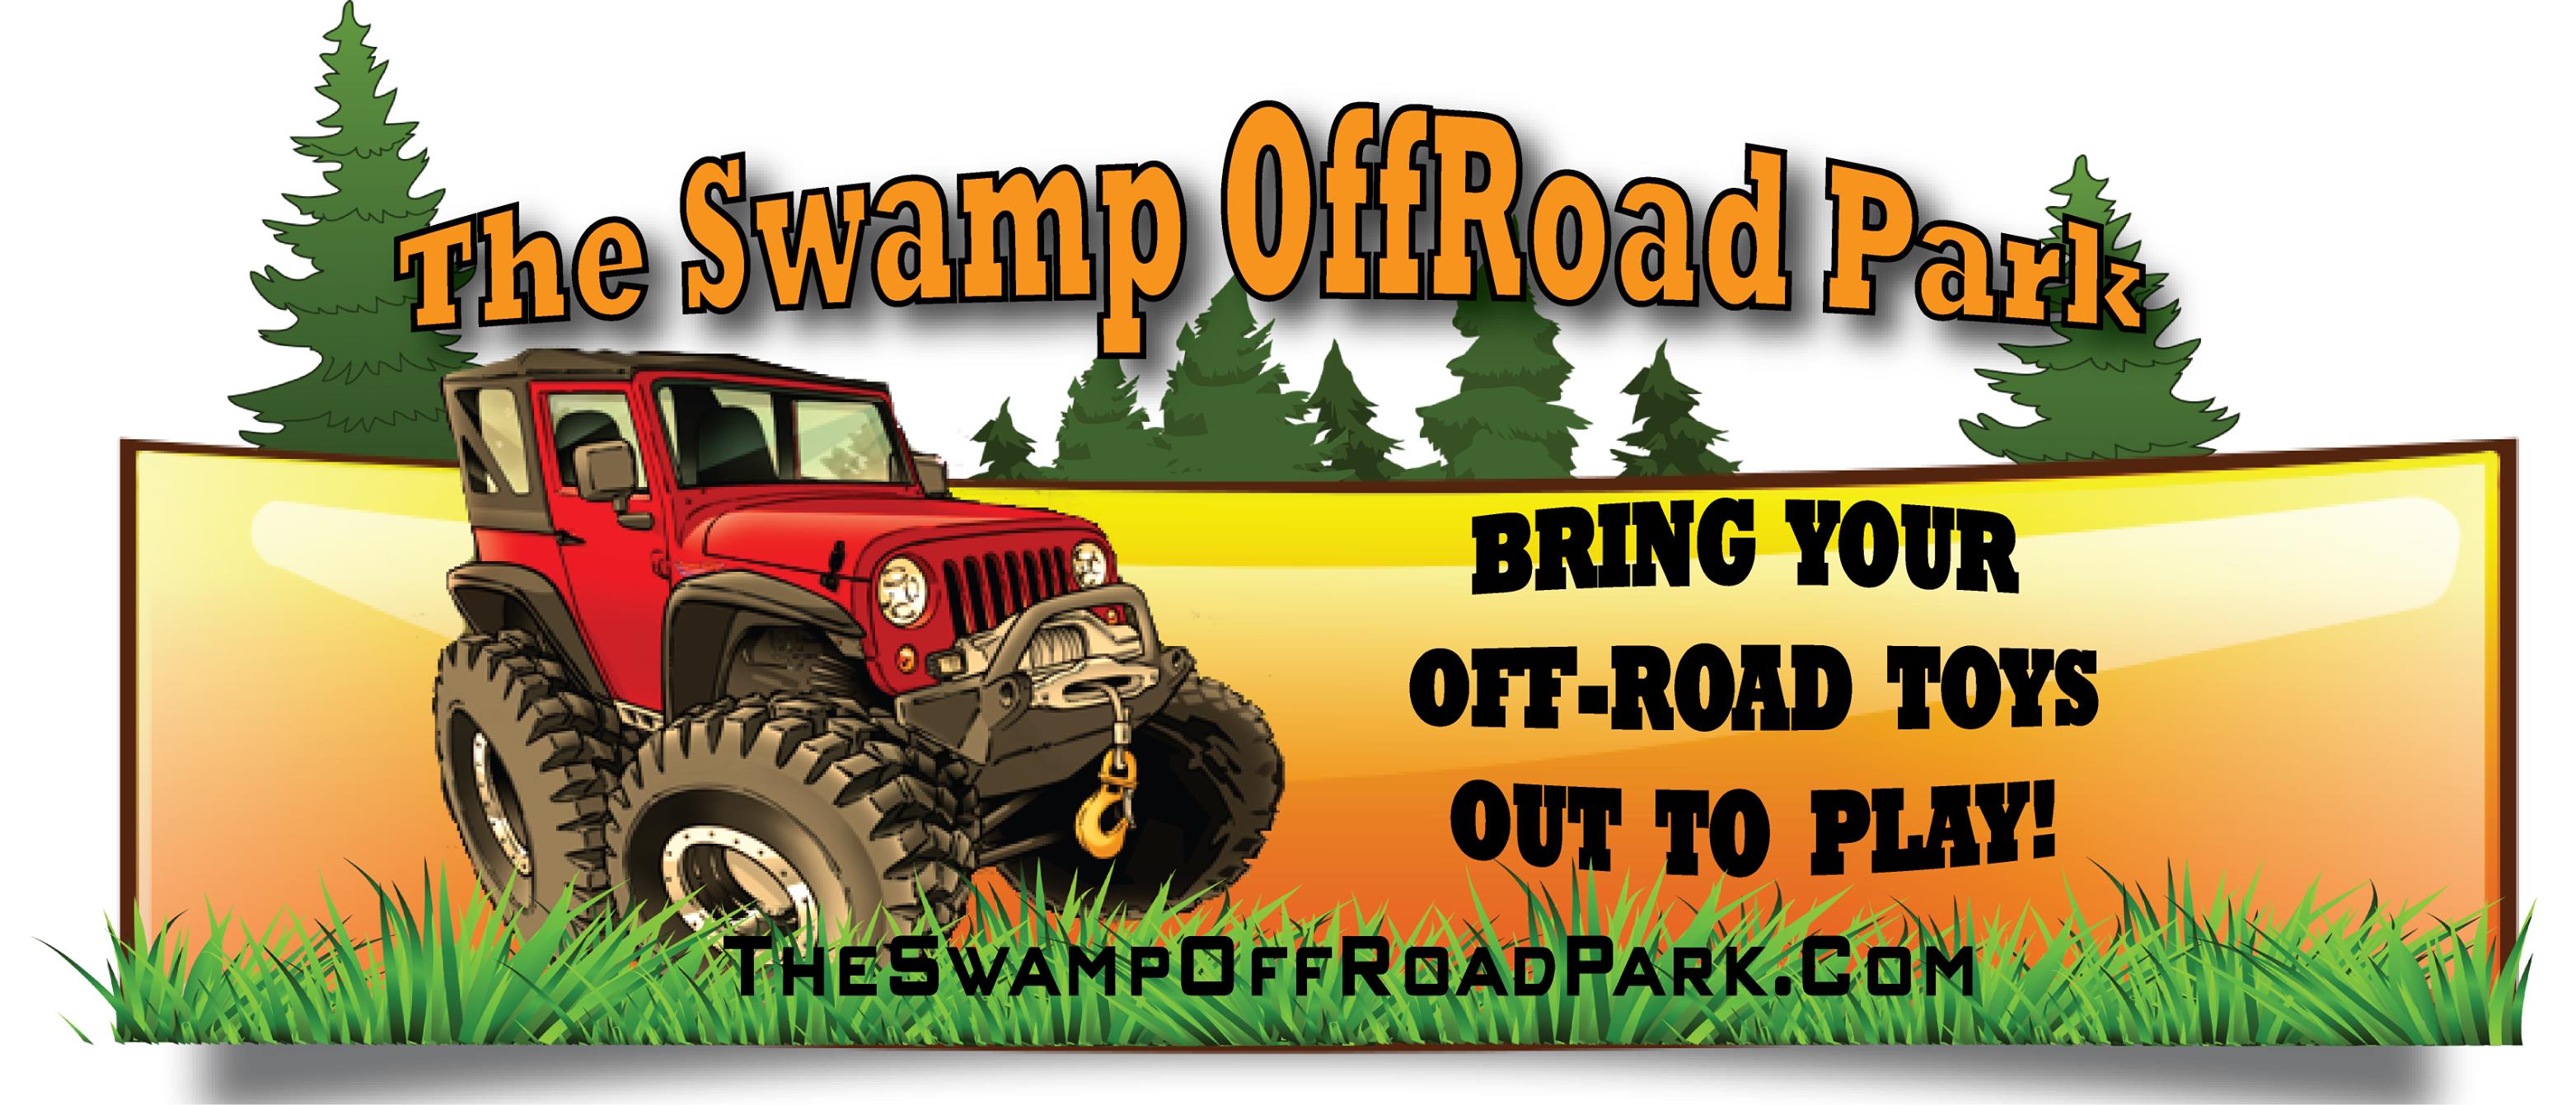 The Swamp OffRoad Park|Park|Travel